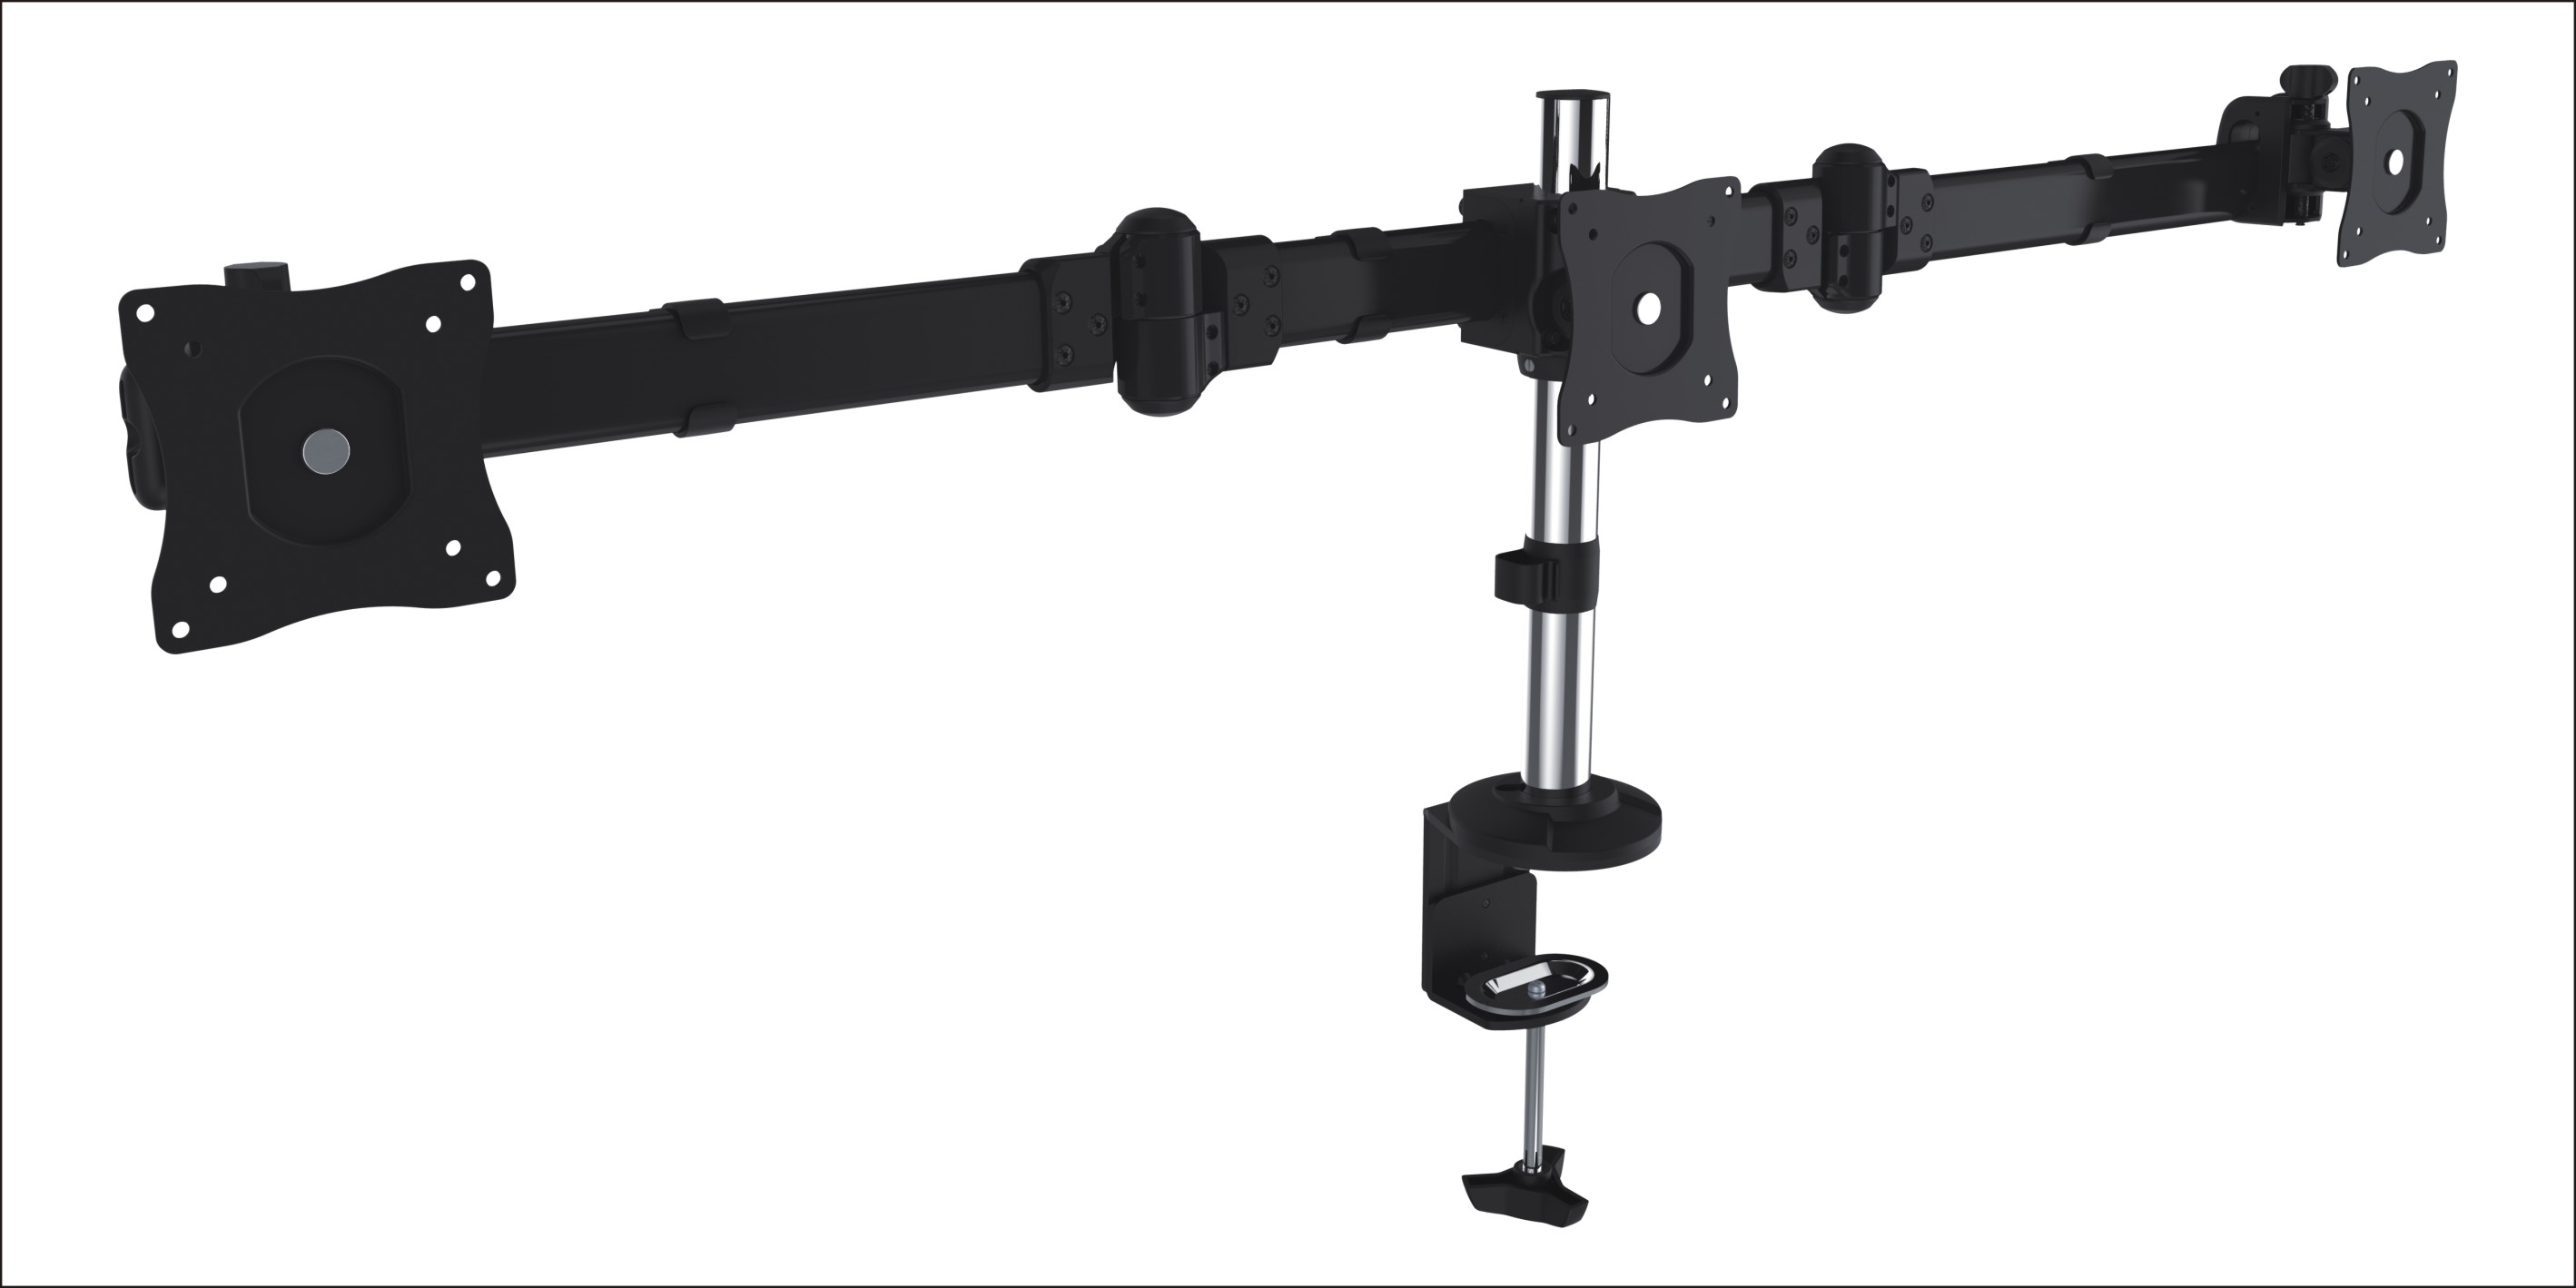  Triple Monitor Arm Mounts with Desk Clamp VESA 75/100mm Up to 27" Monitors Up to 8kg per screen VESA 75x75/100x100  